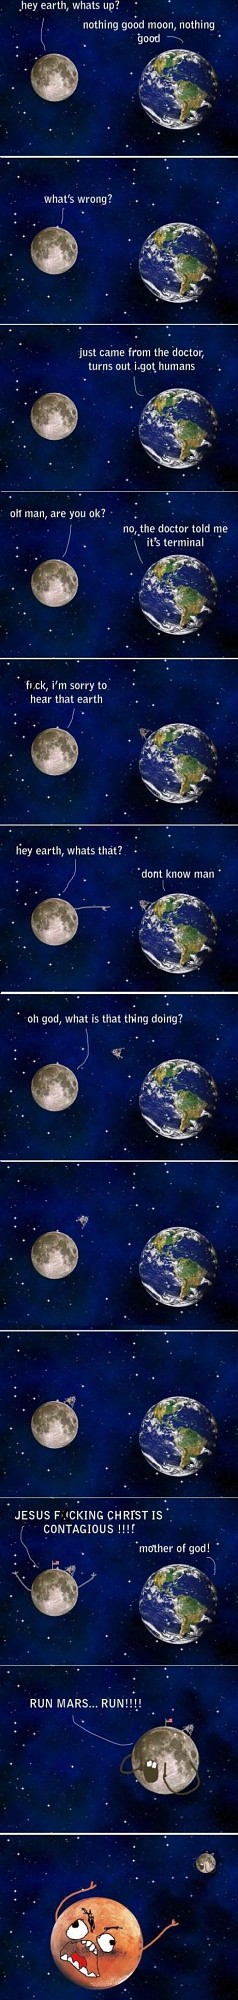 Earth got humans